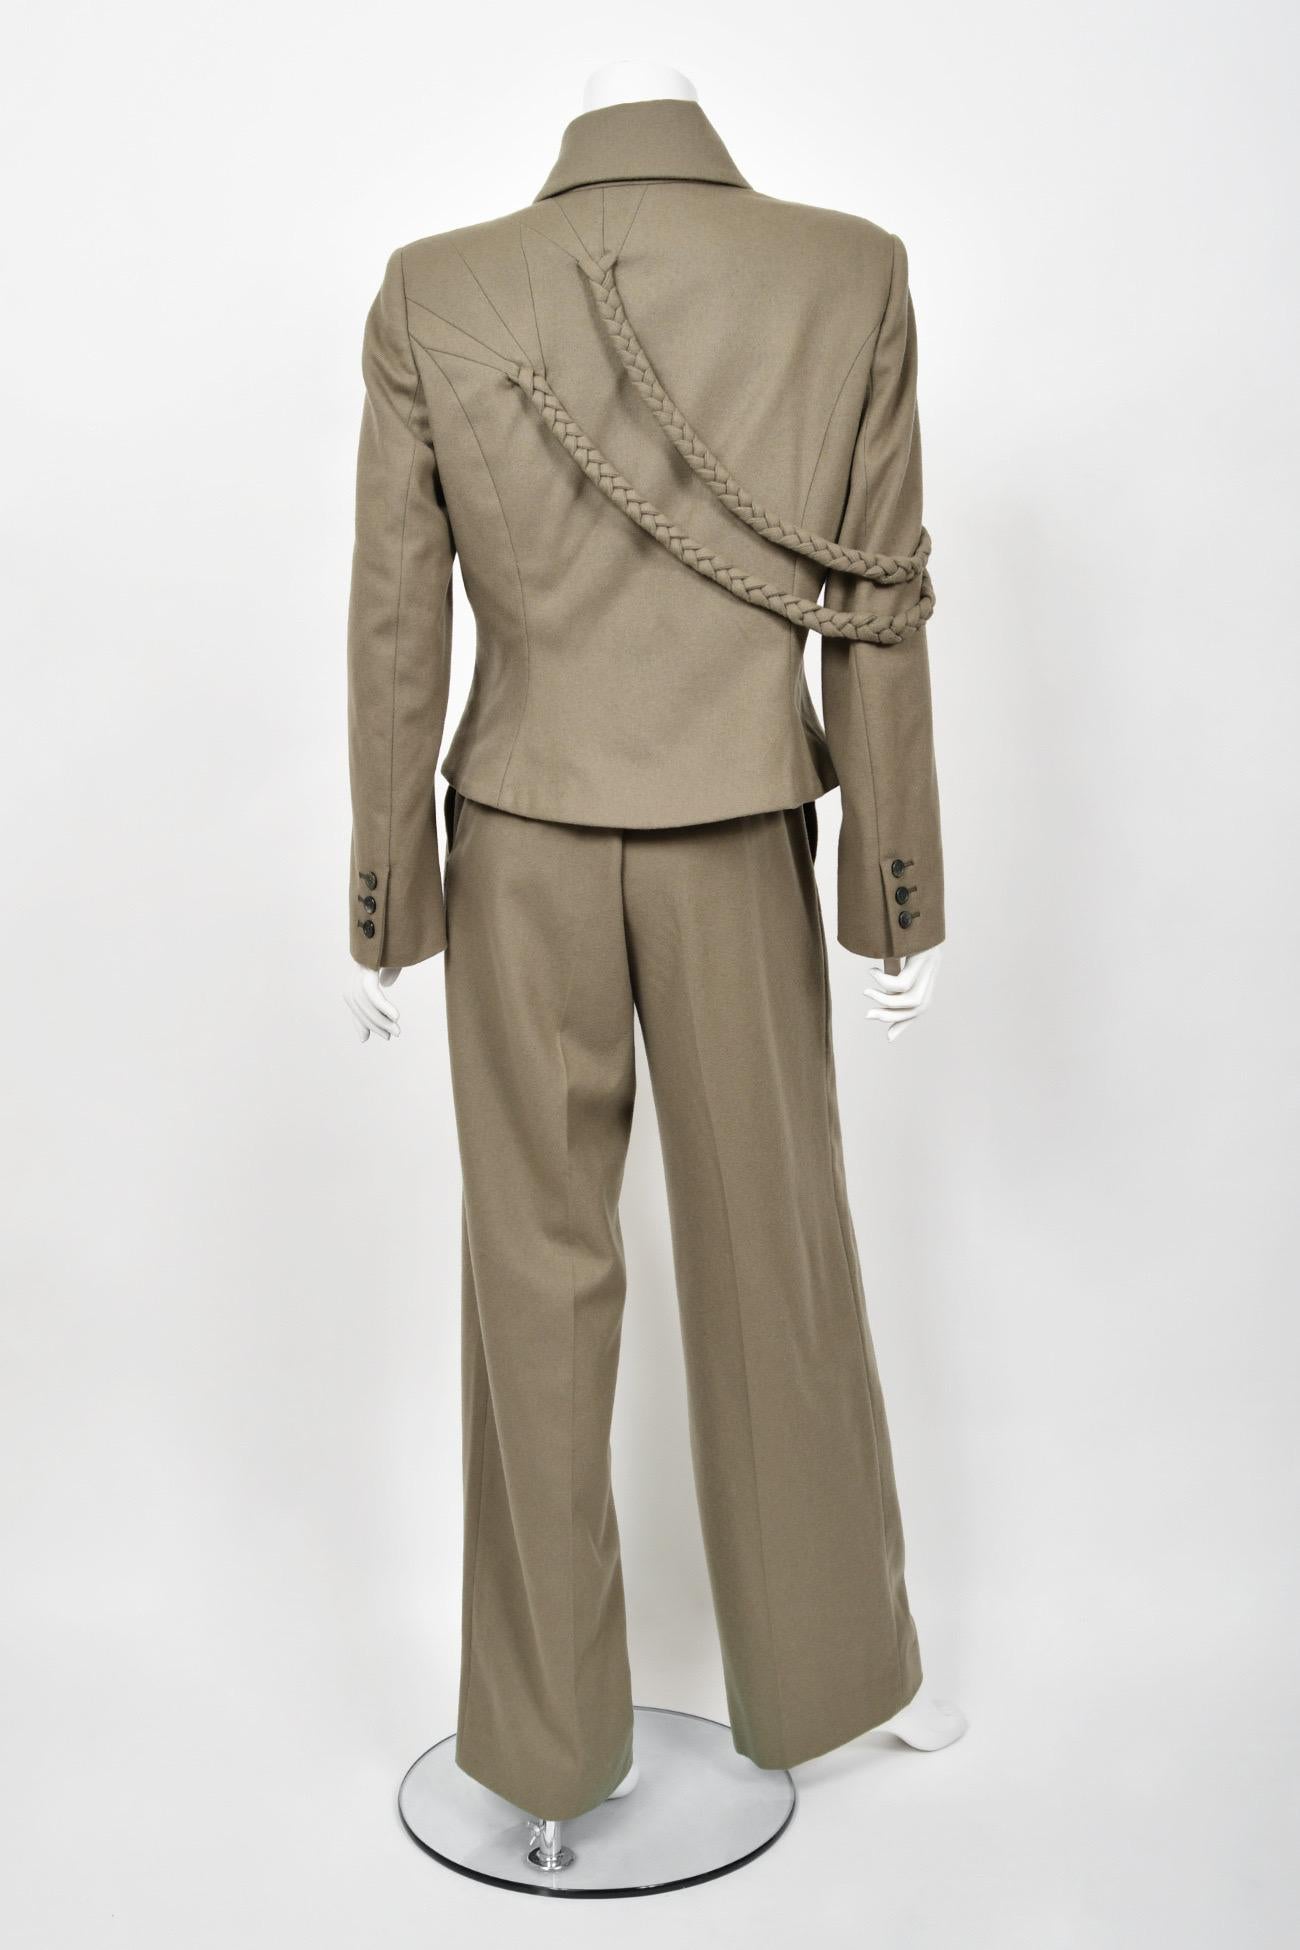 2001 Alexander McQueen Documented Runway Moss-Green Wool Braided Jacket Pantsuit For Sale 9